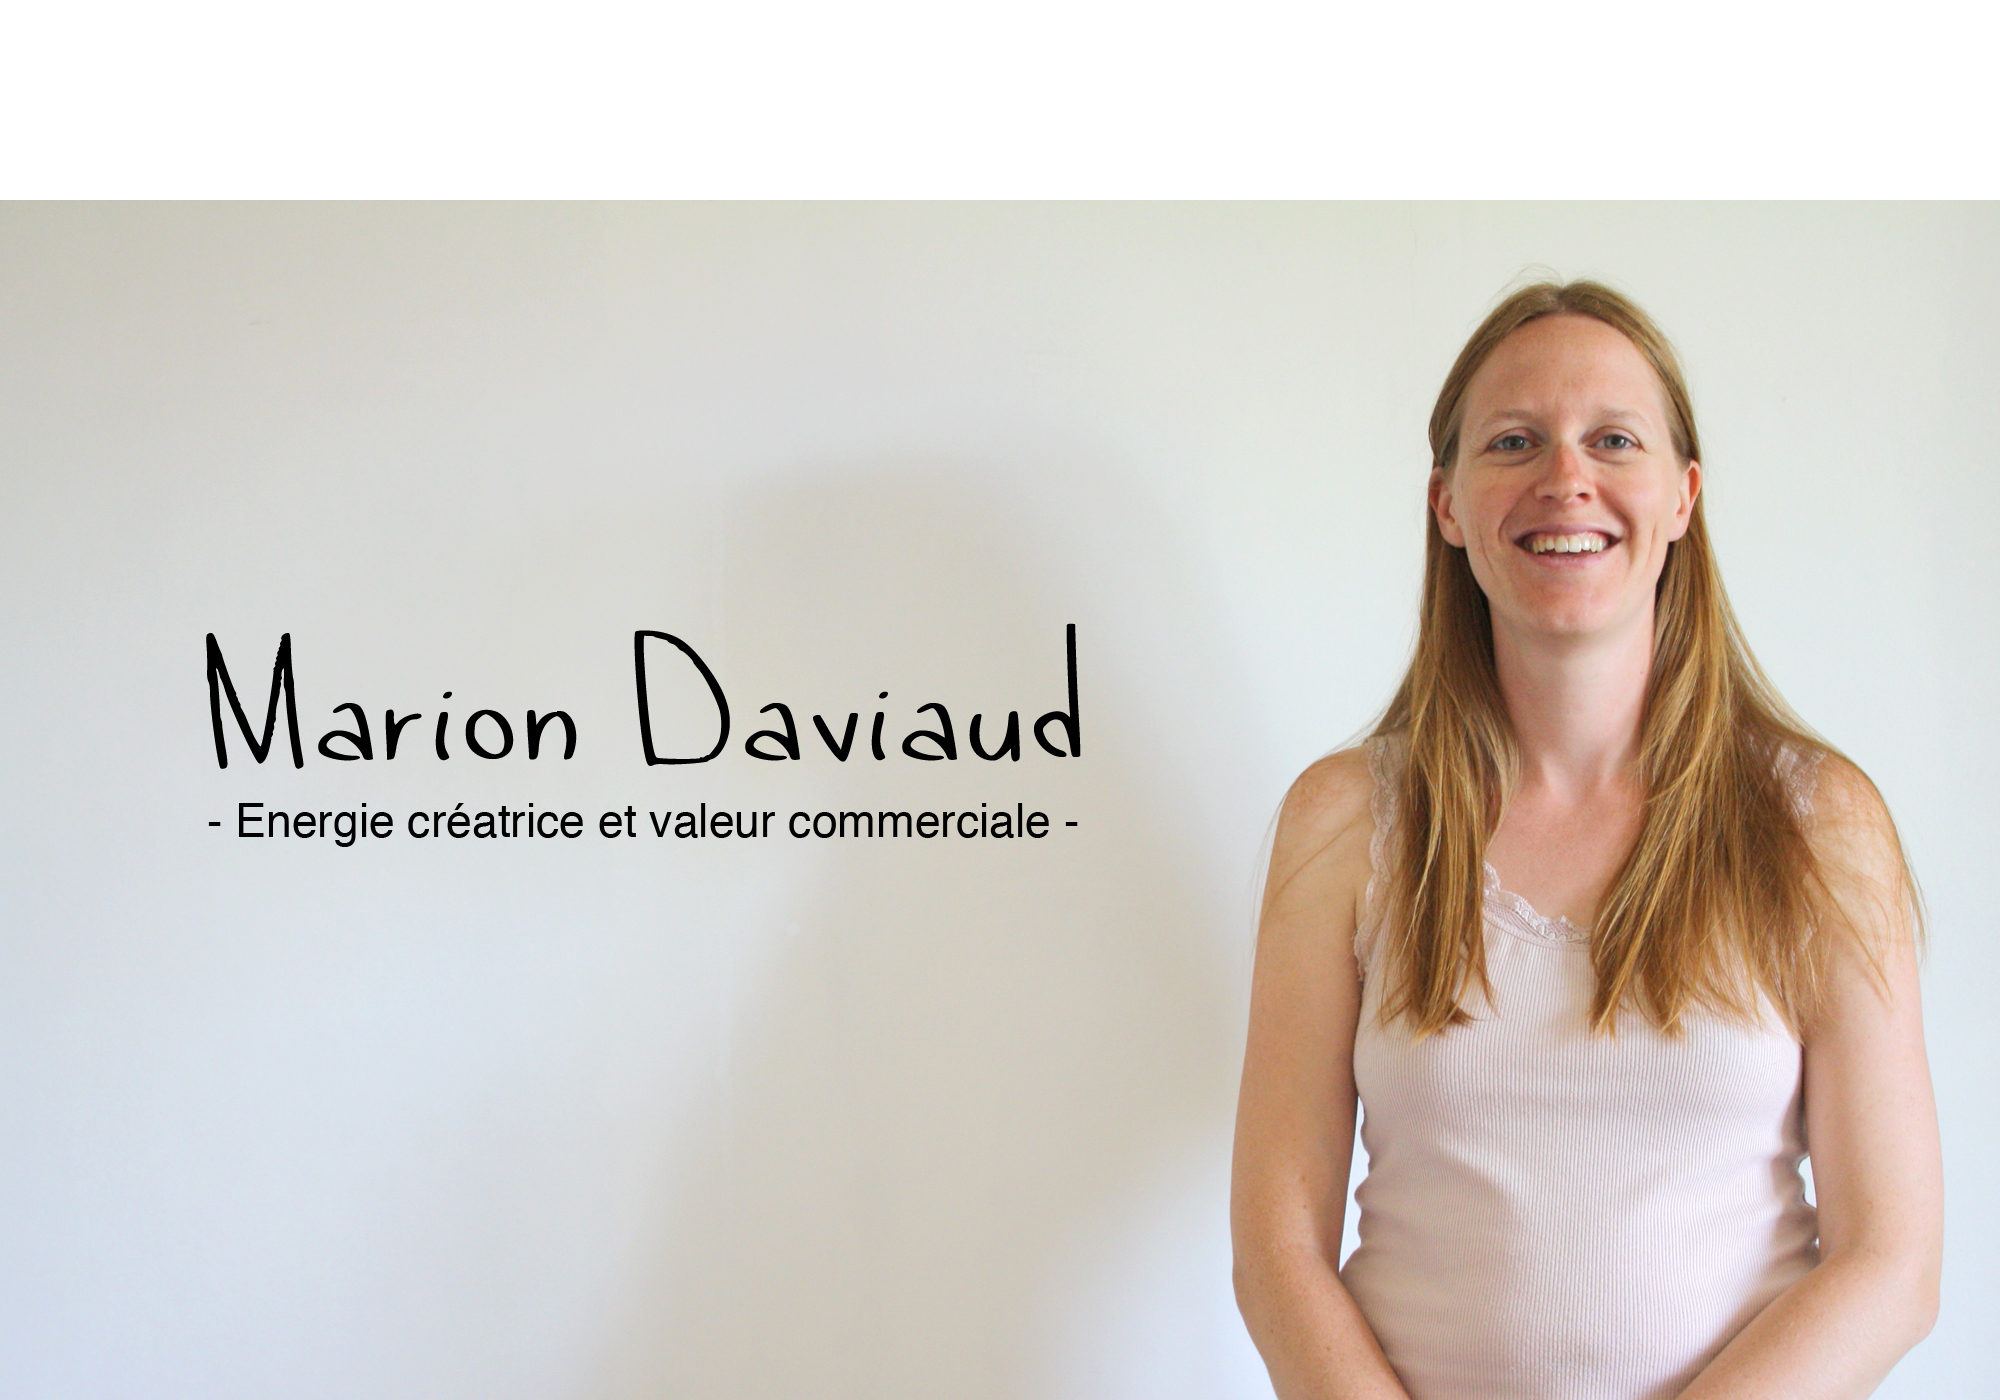 Marion Daviaud